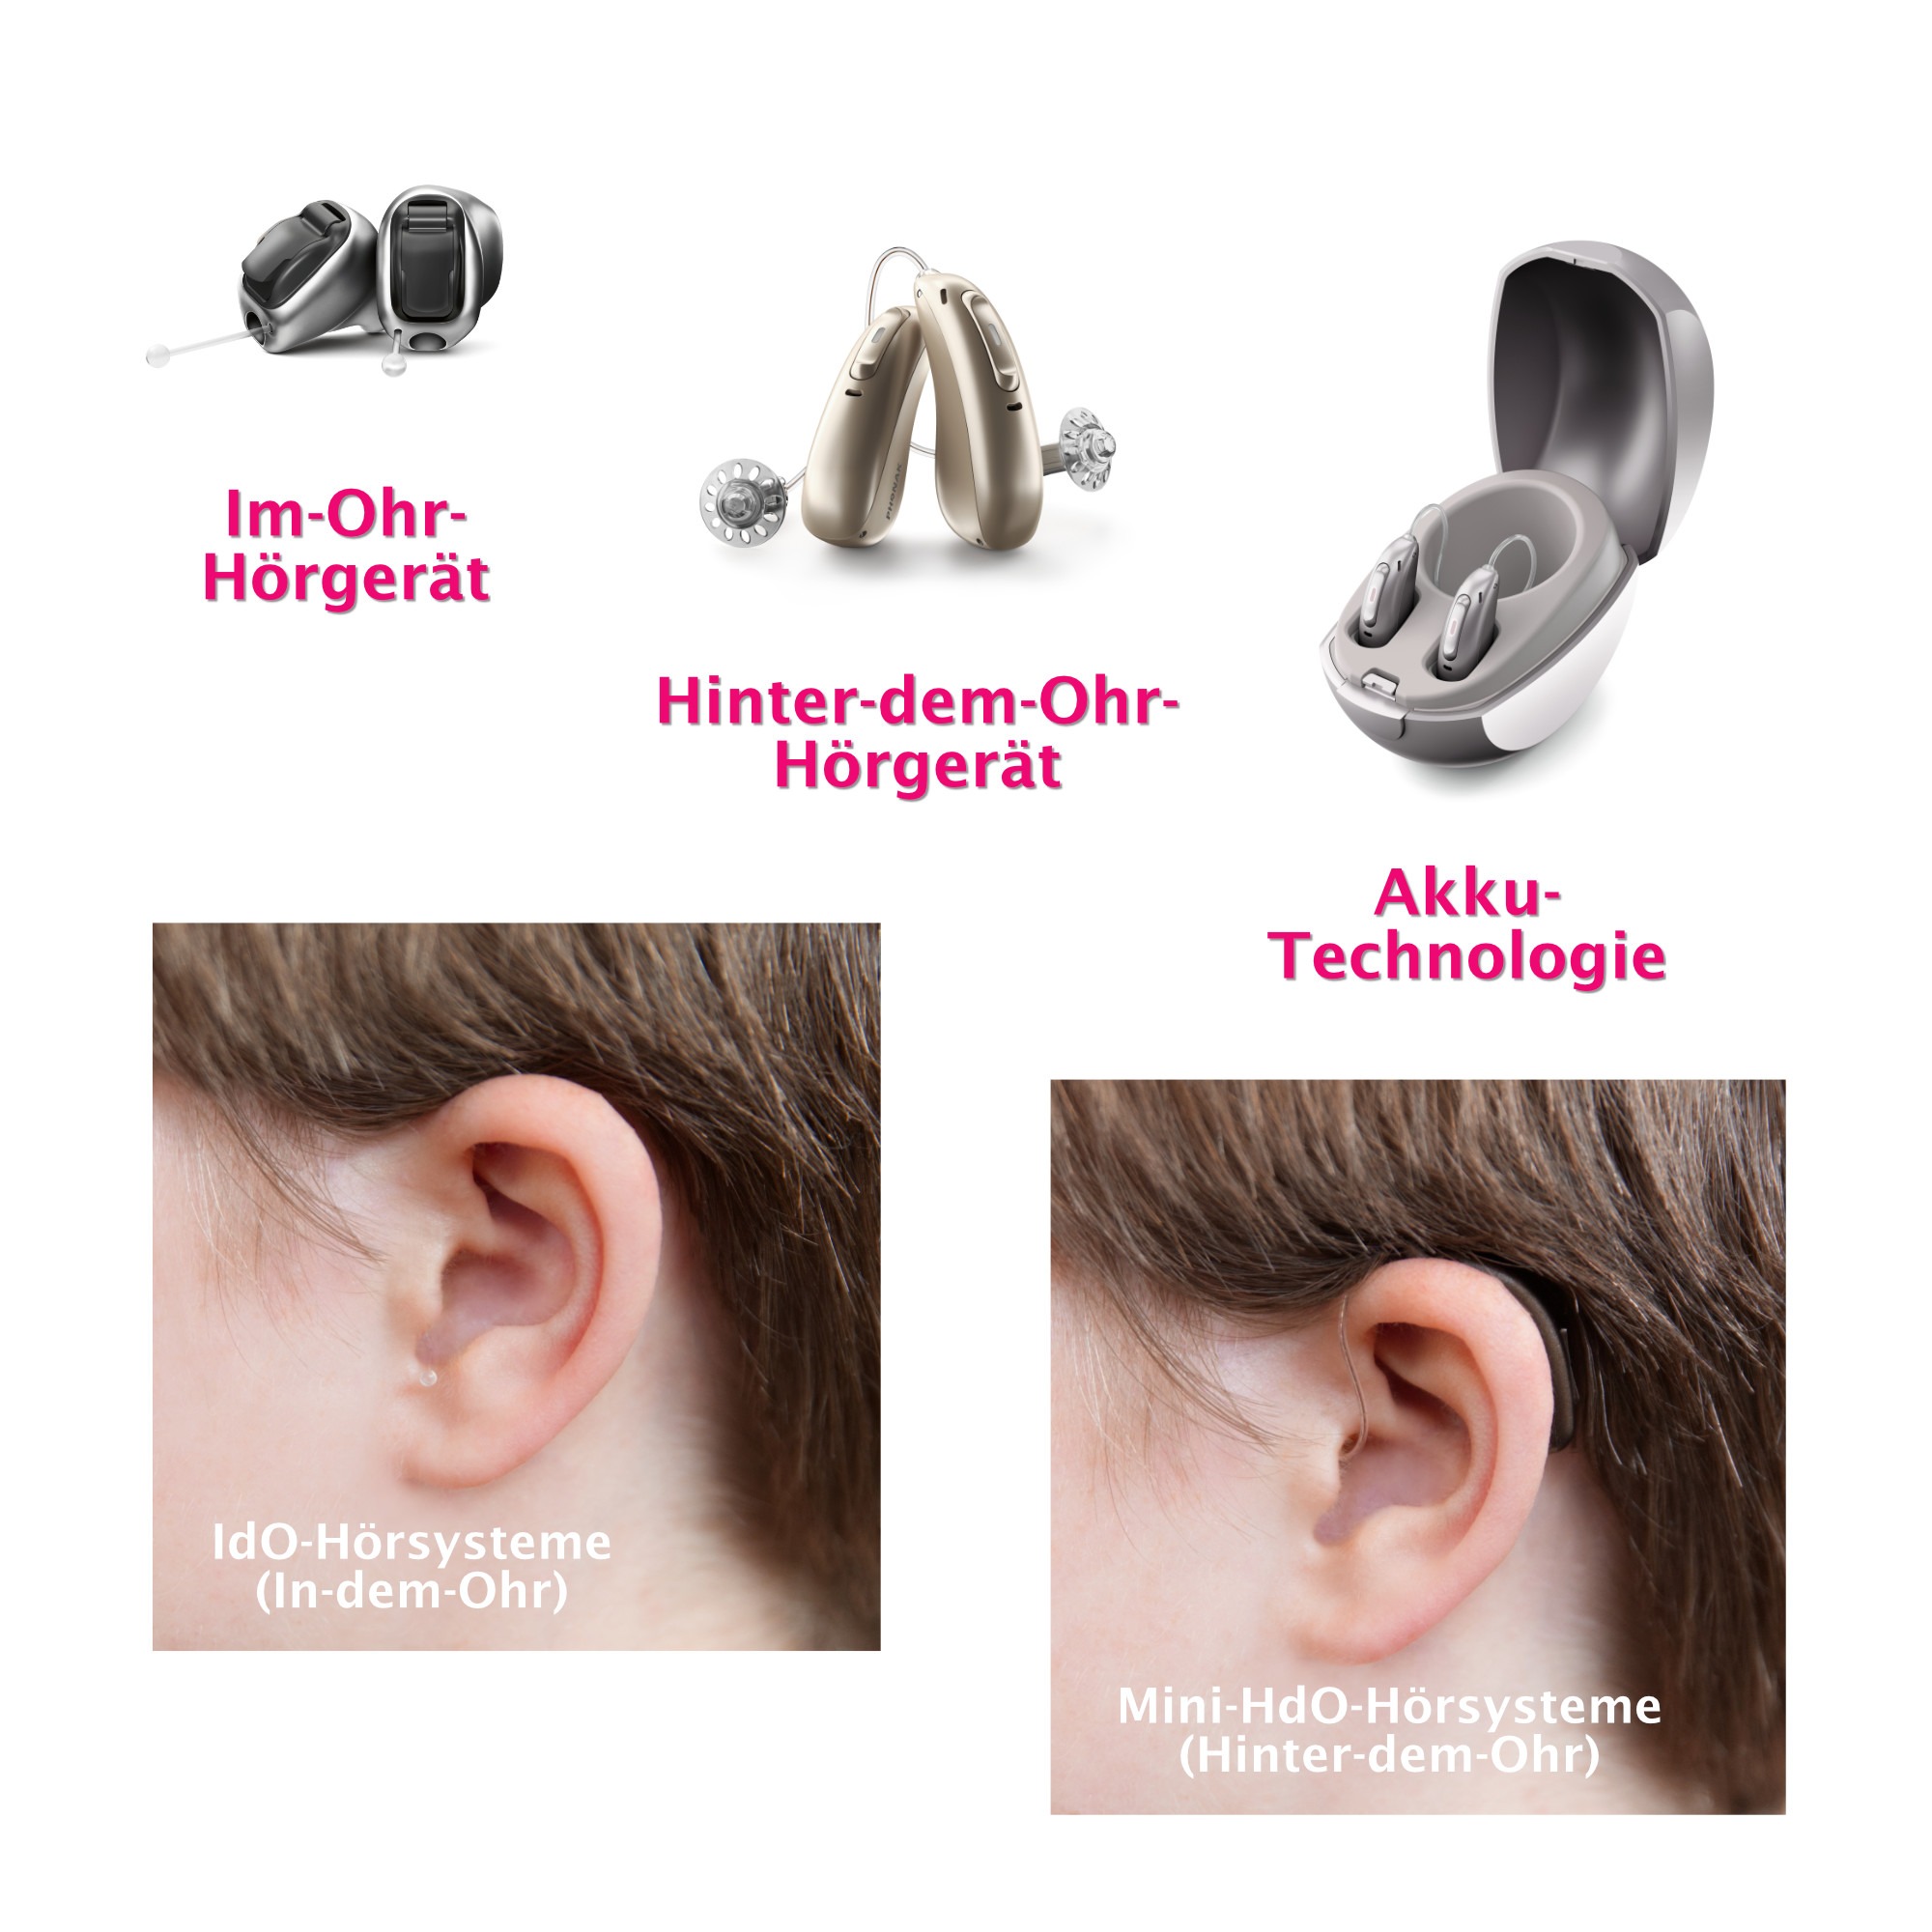 Vergleichsbilder zwischen Im-Ohr-Hörgerät, Hinter-dem-Ohr-Hörgerät und Akku-Technologie Hörgerät.